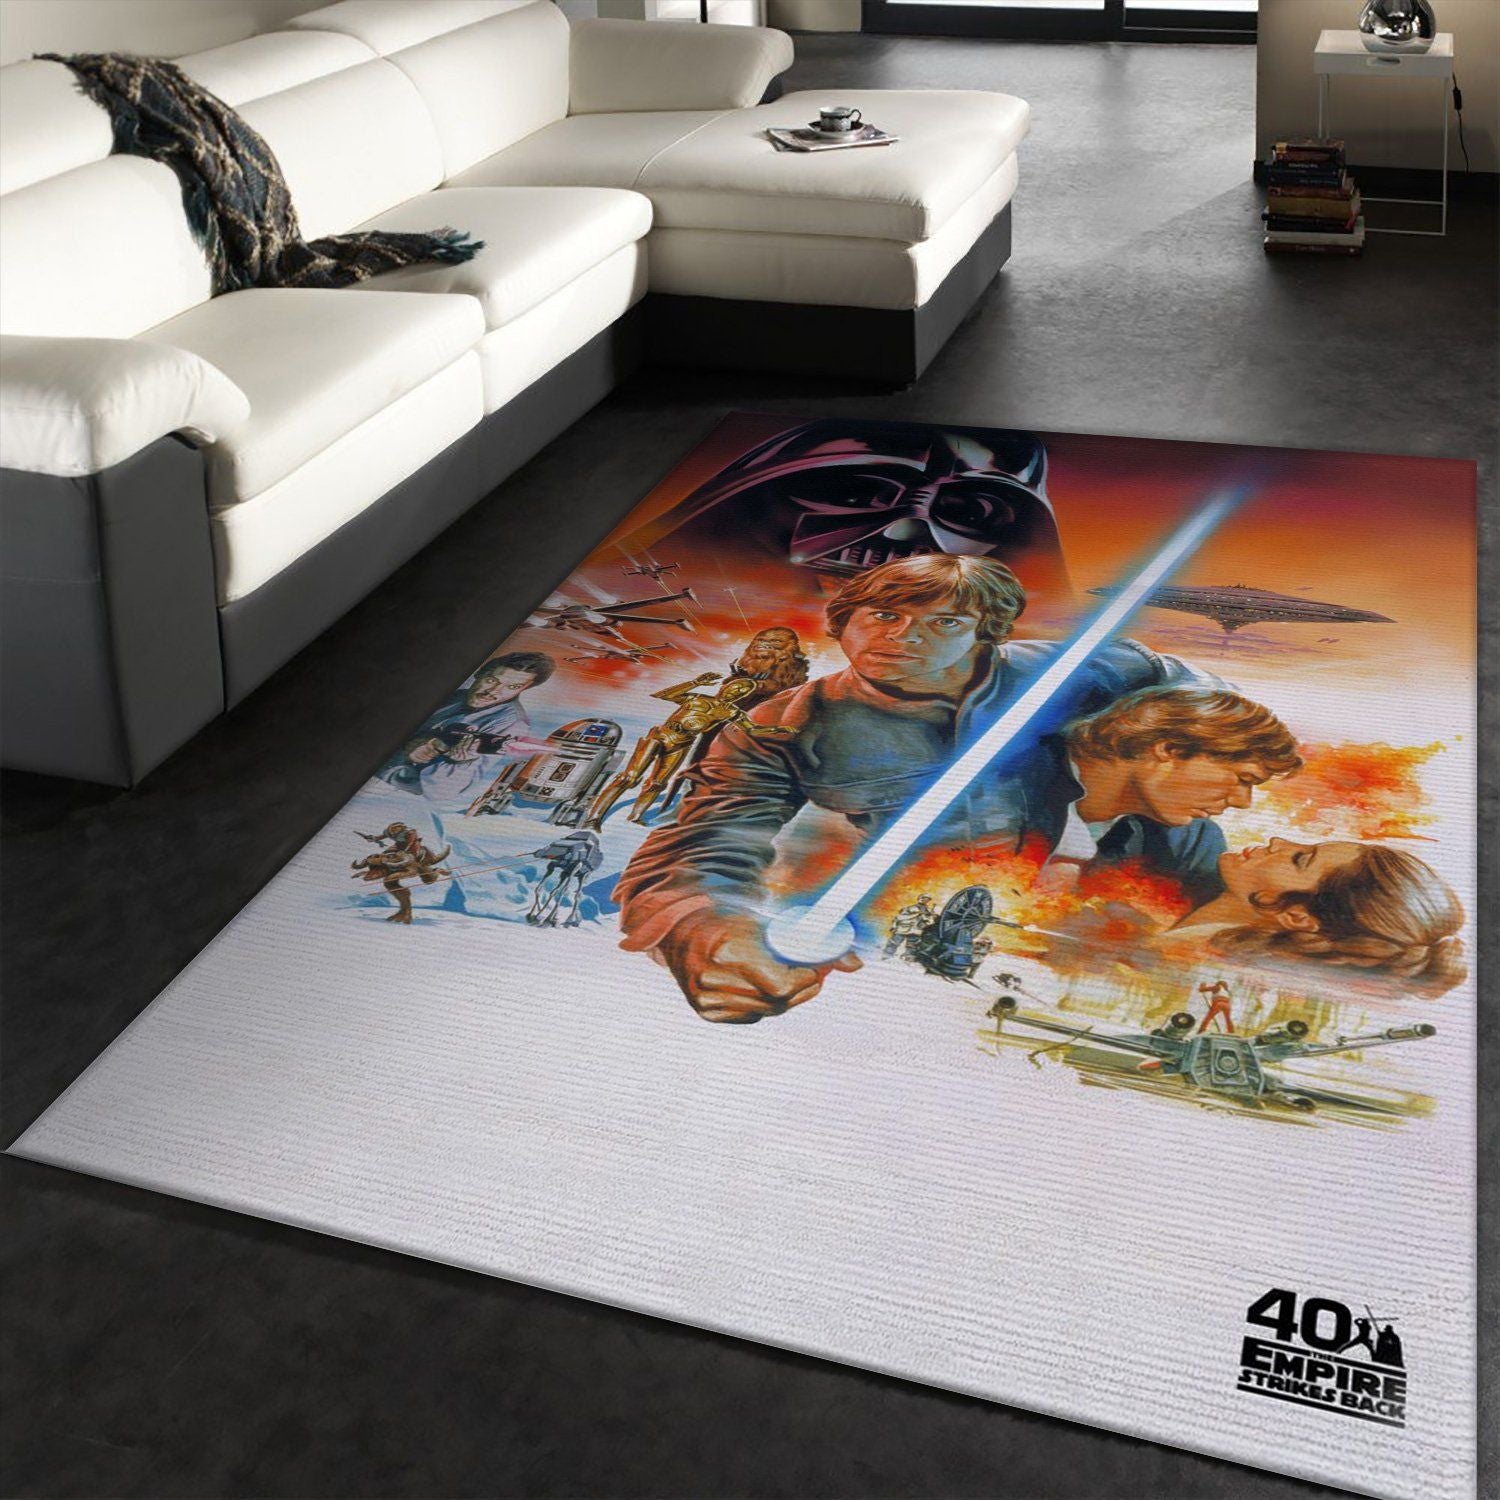 Saga Star War 3D Area Rug Living Room And Bed Room Home Decor Carpet Bedroom Rug Floor Decor Home Decor